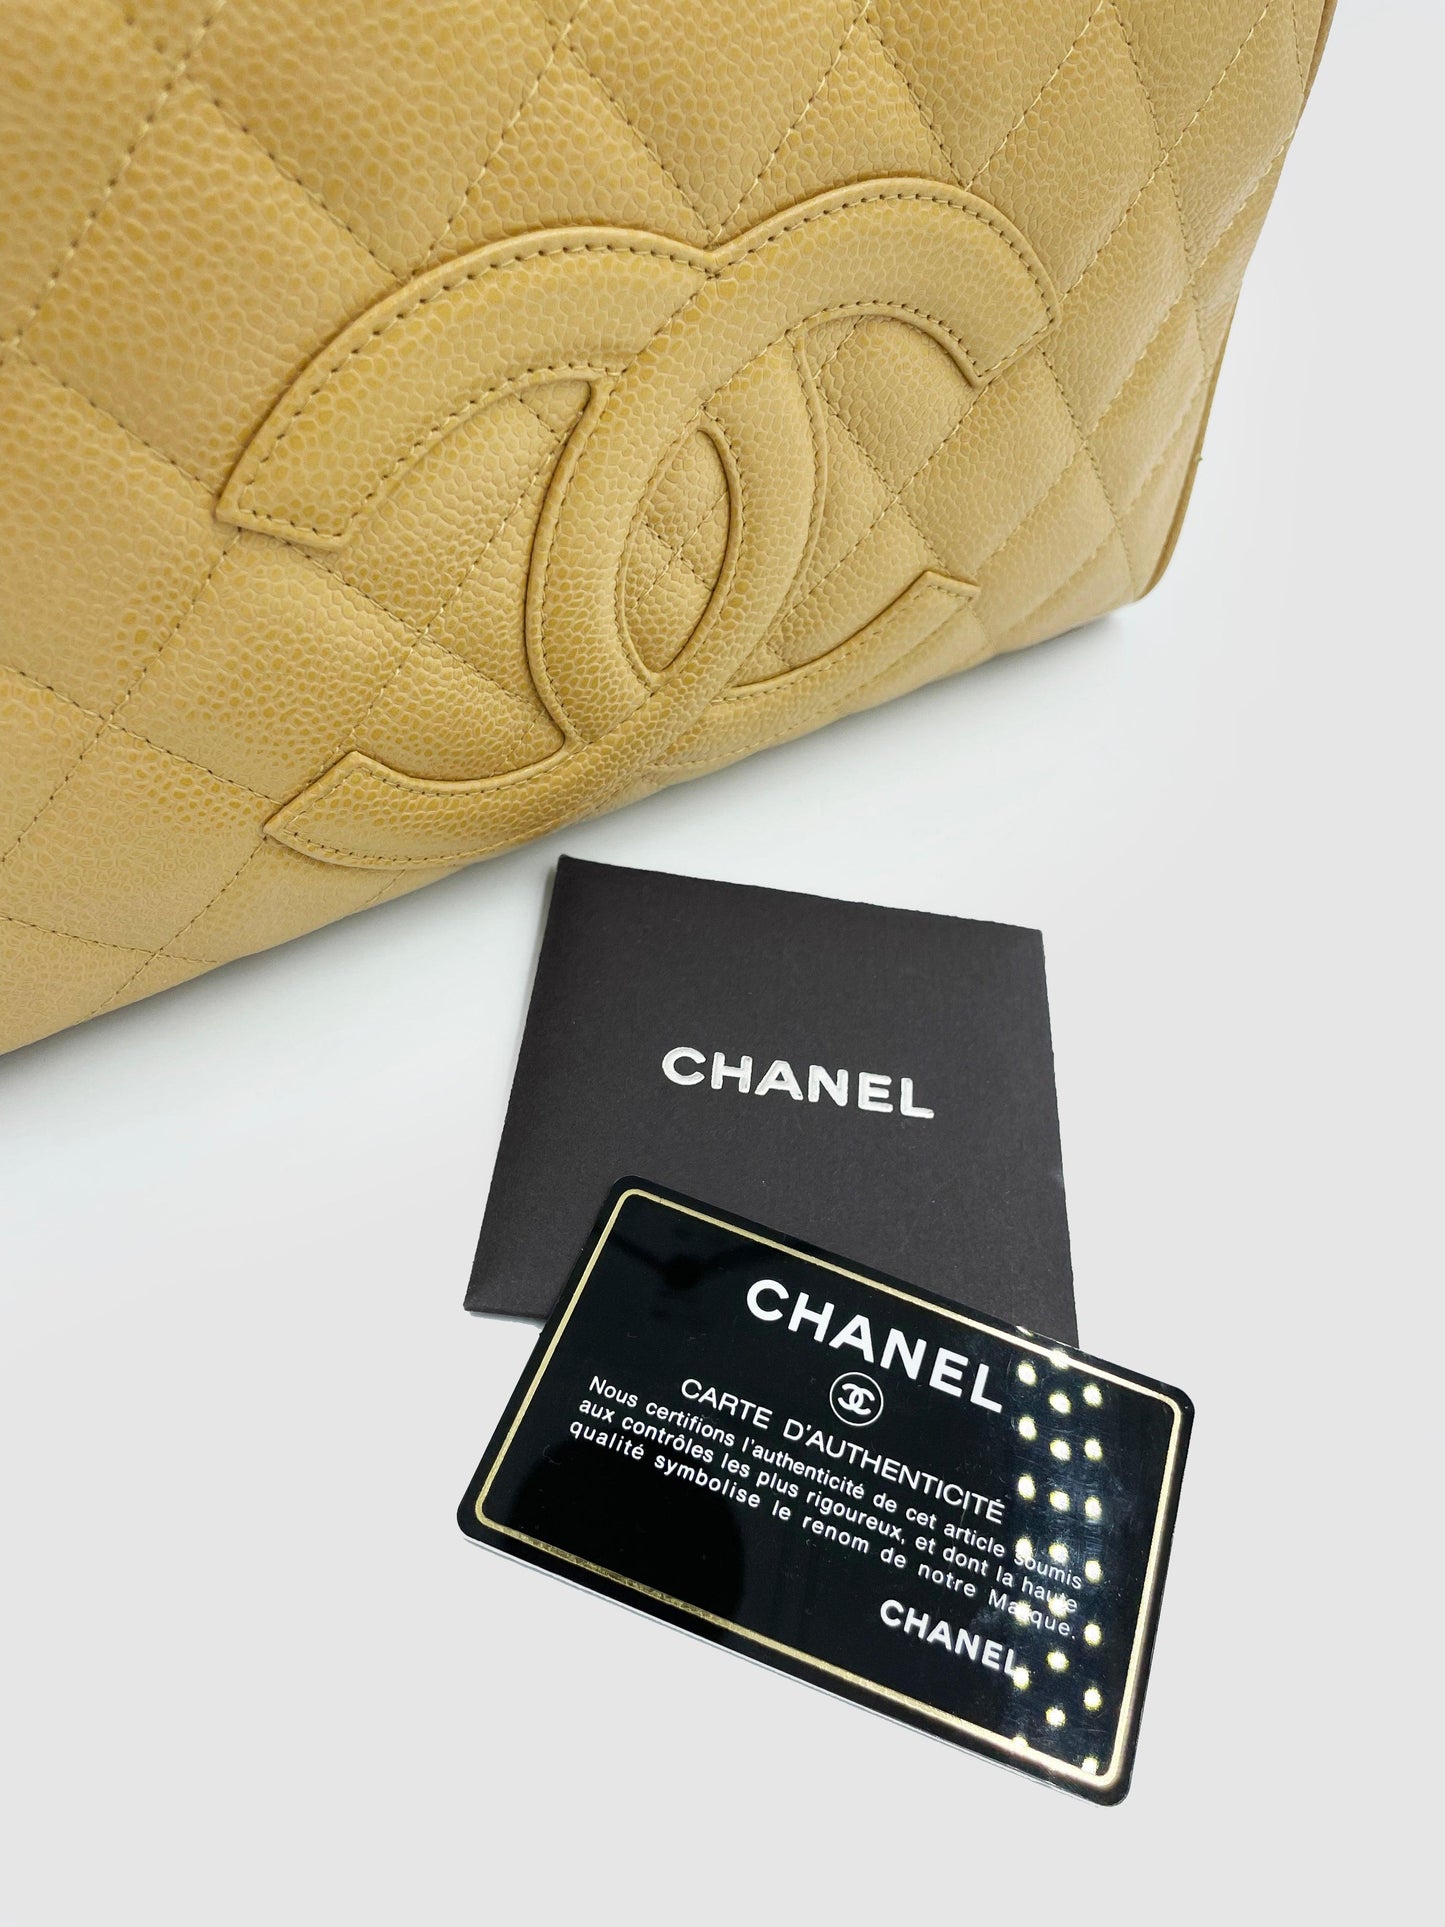 Chanel "Classic Bowler" - Second Nature Boutique